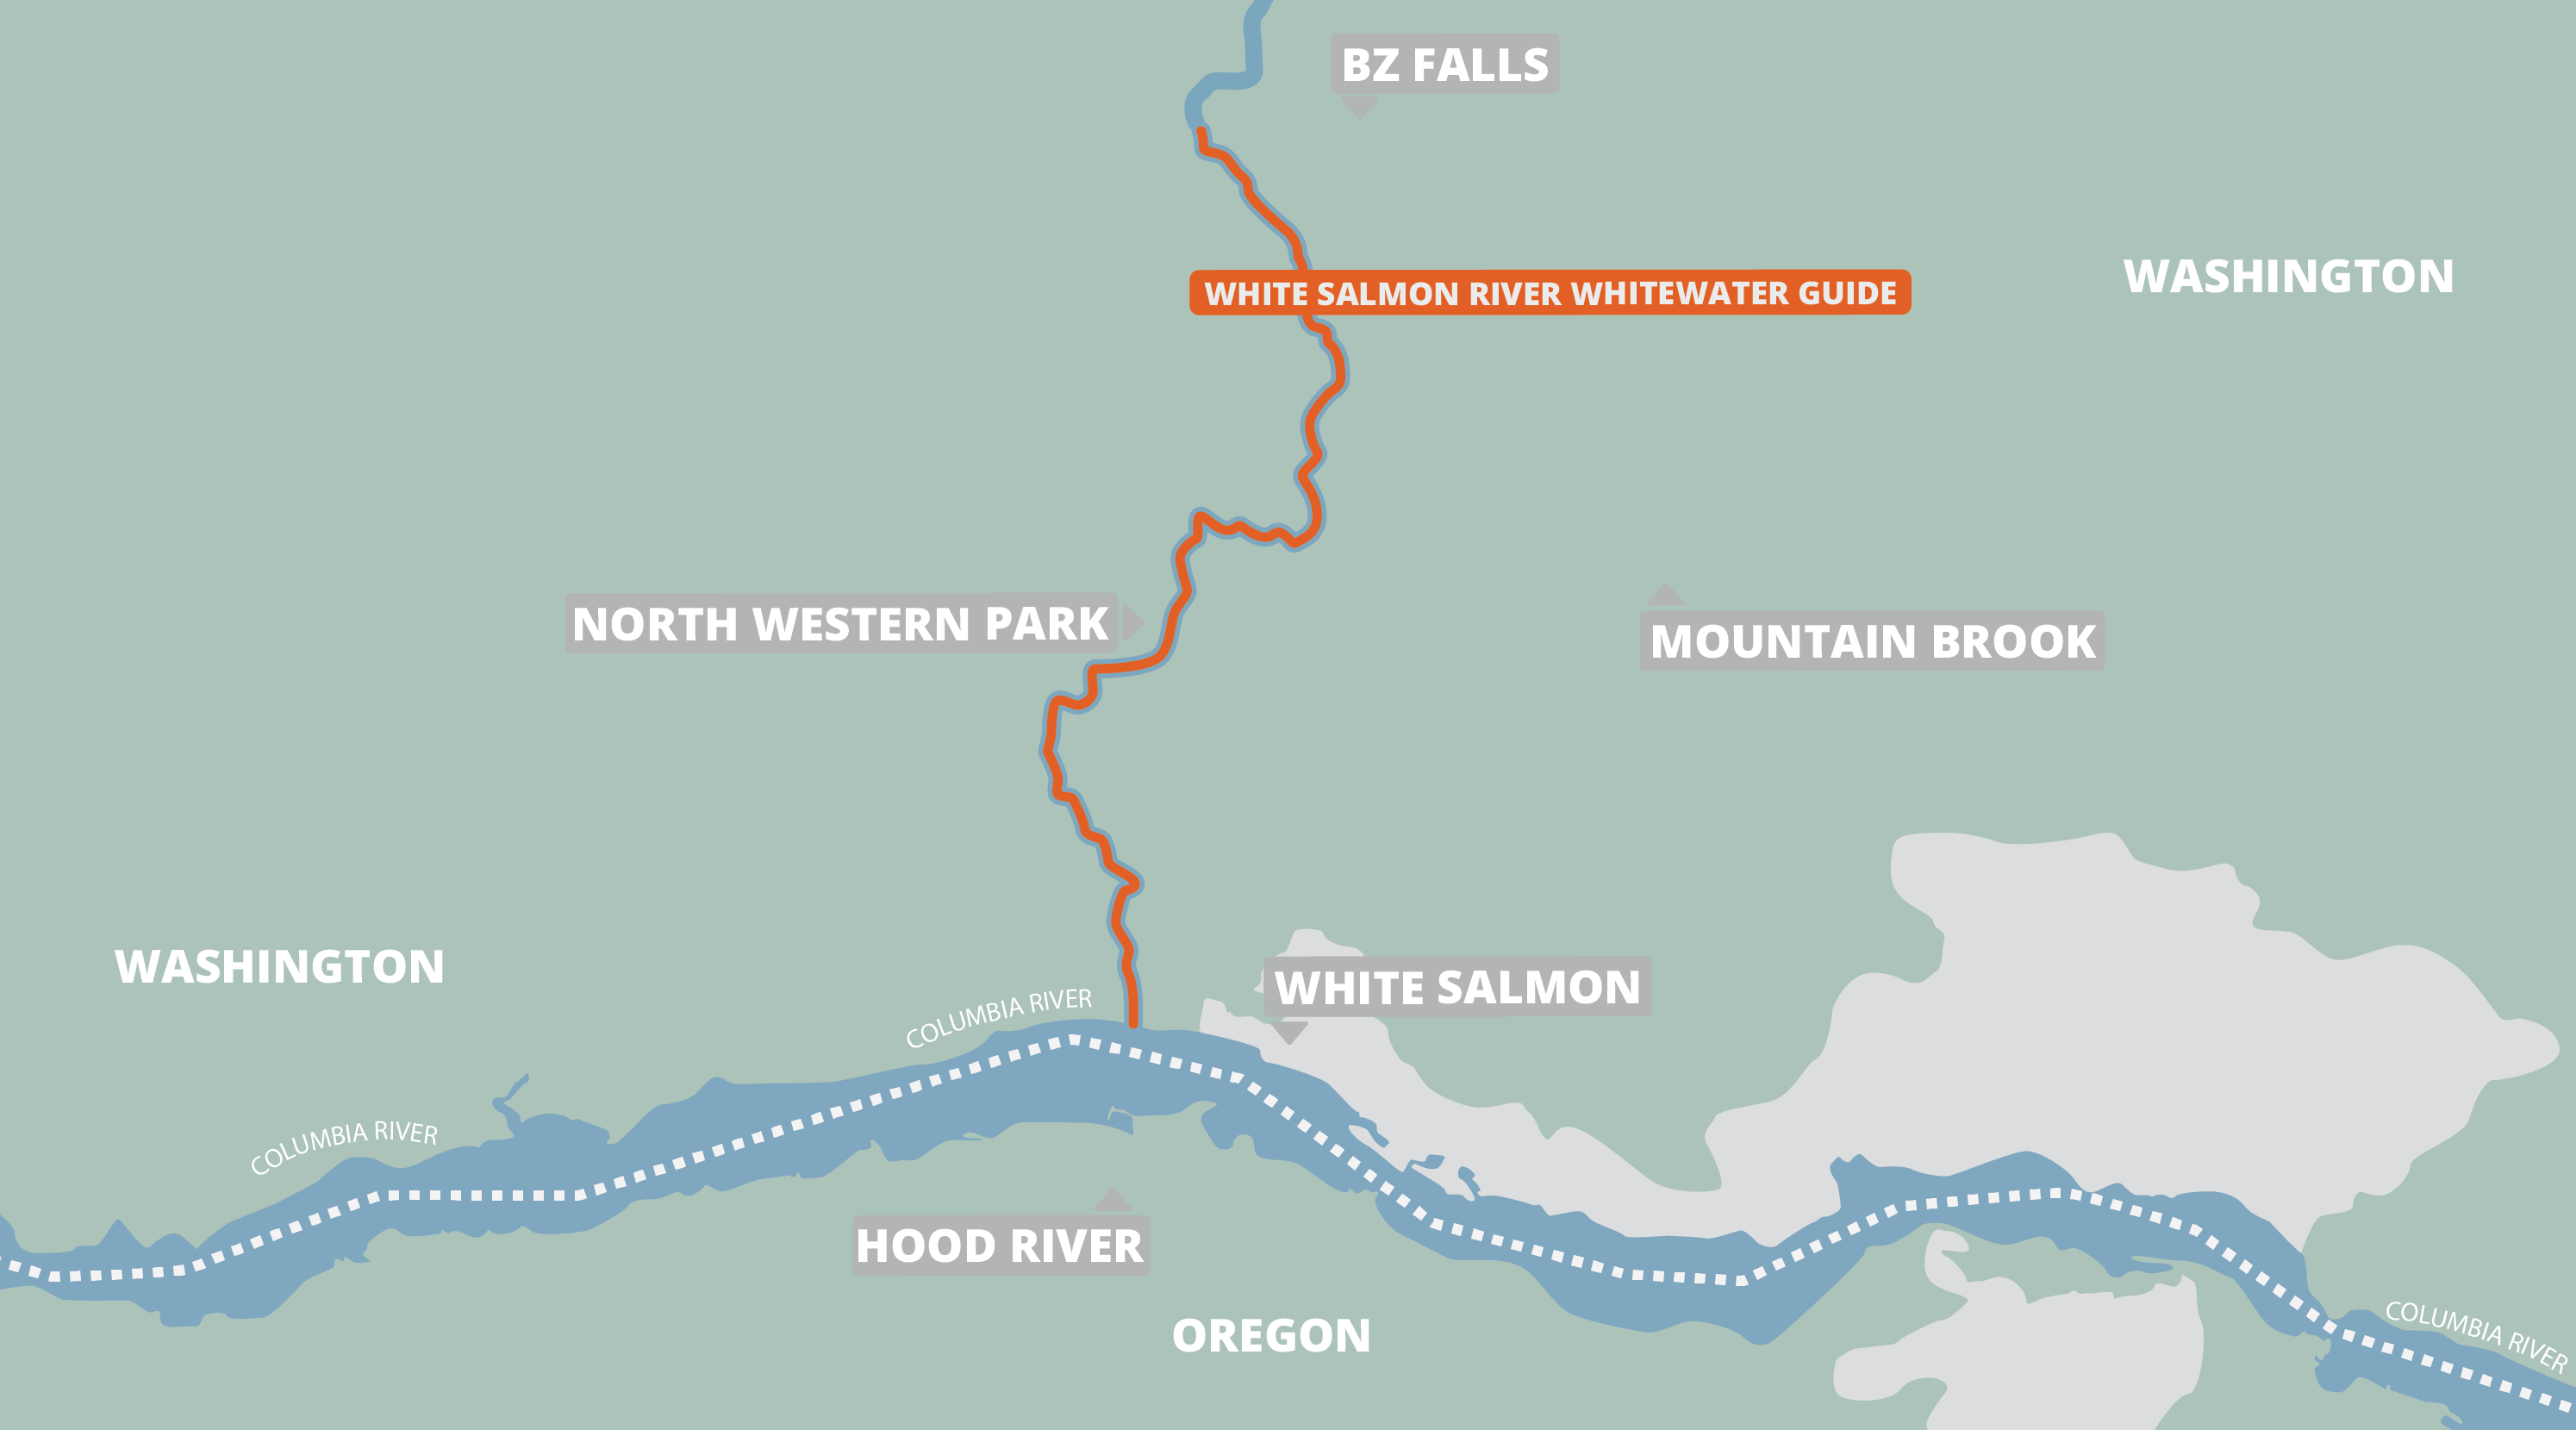 White salmon river whitewater guide